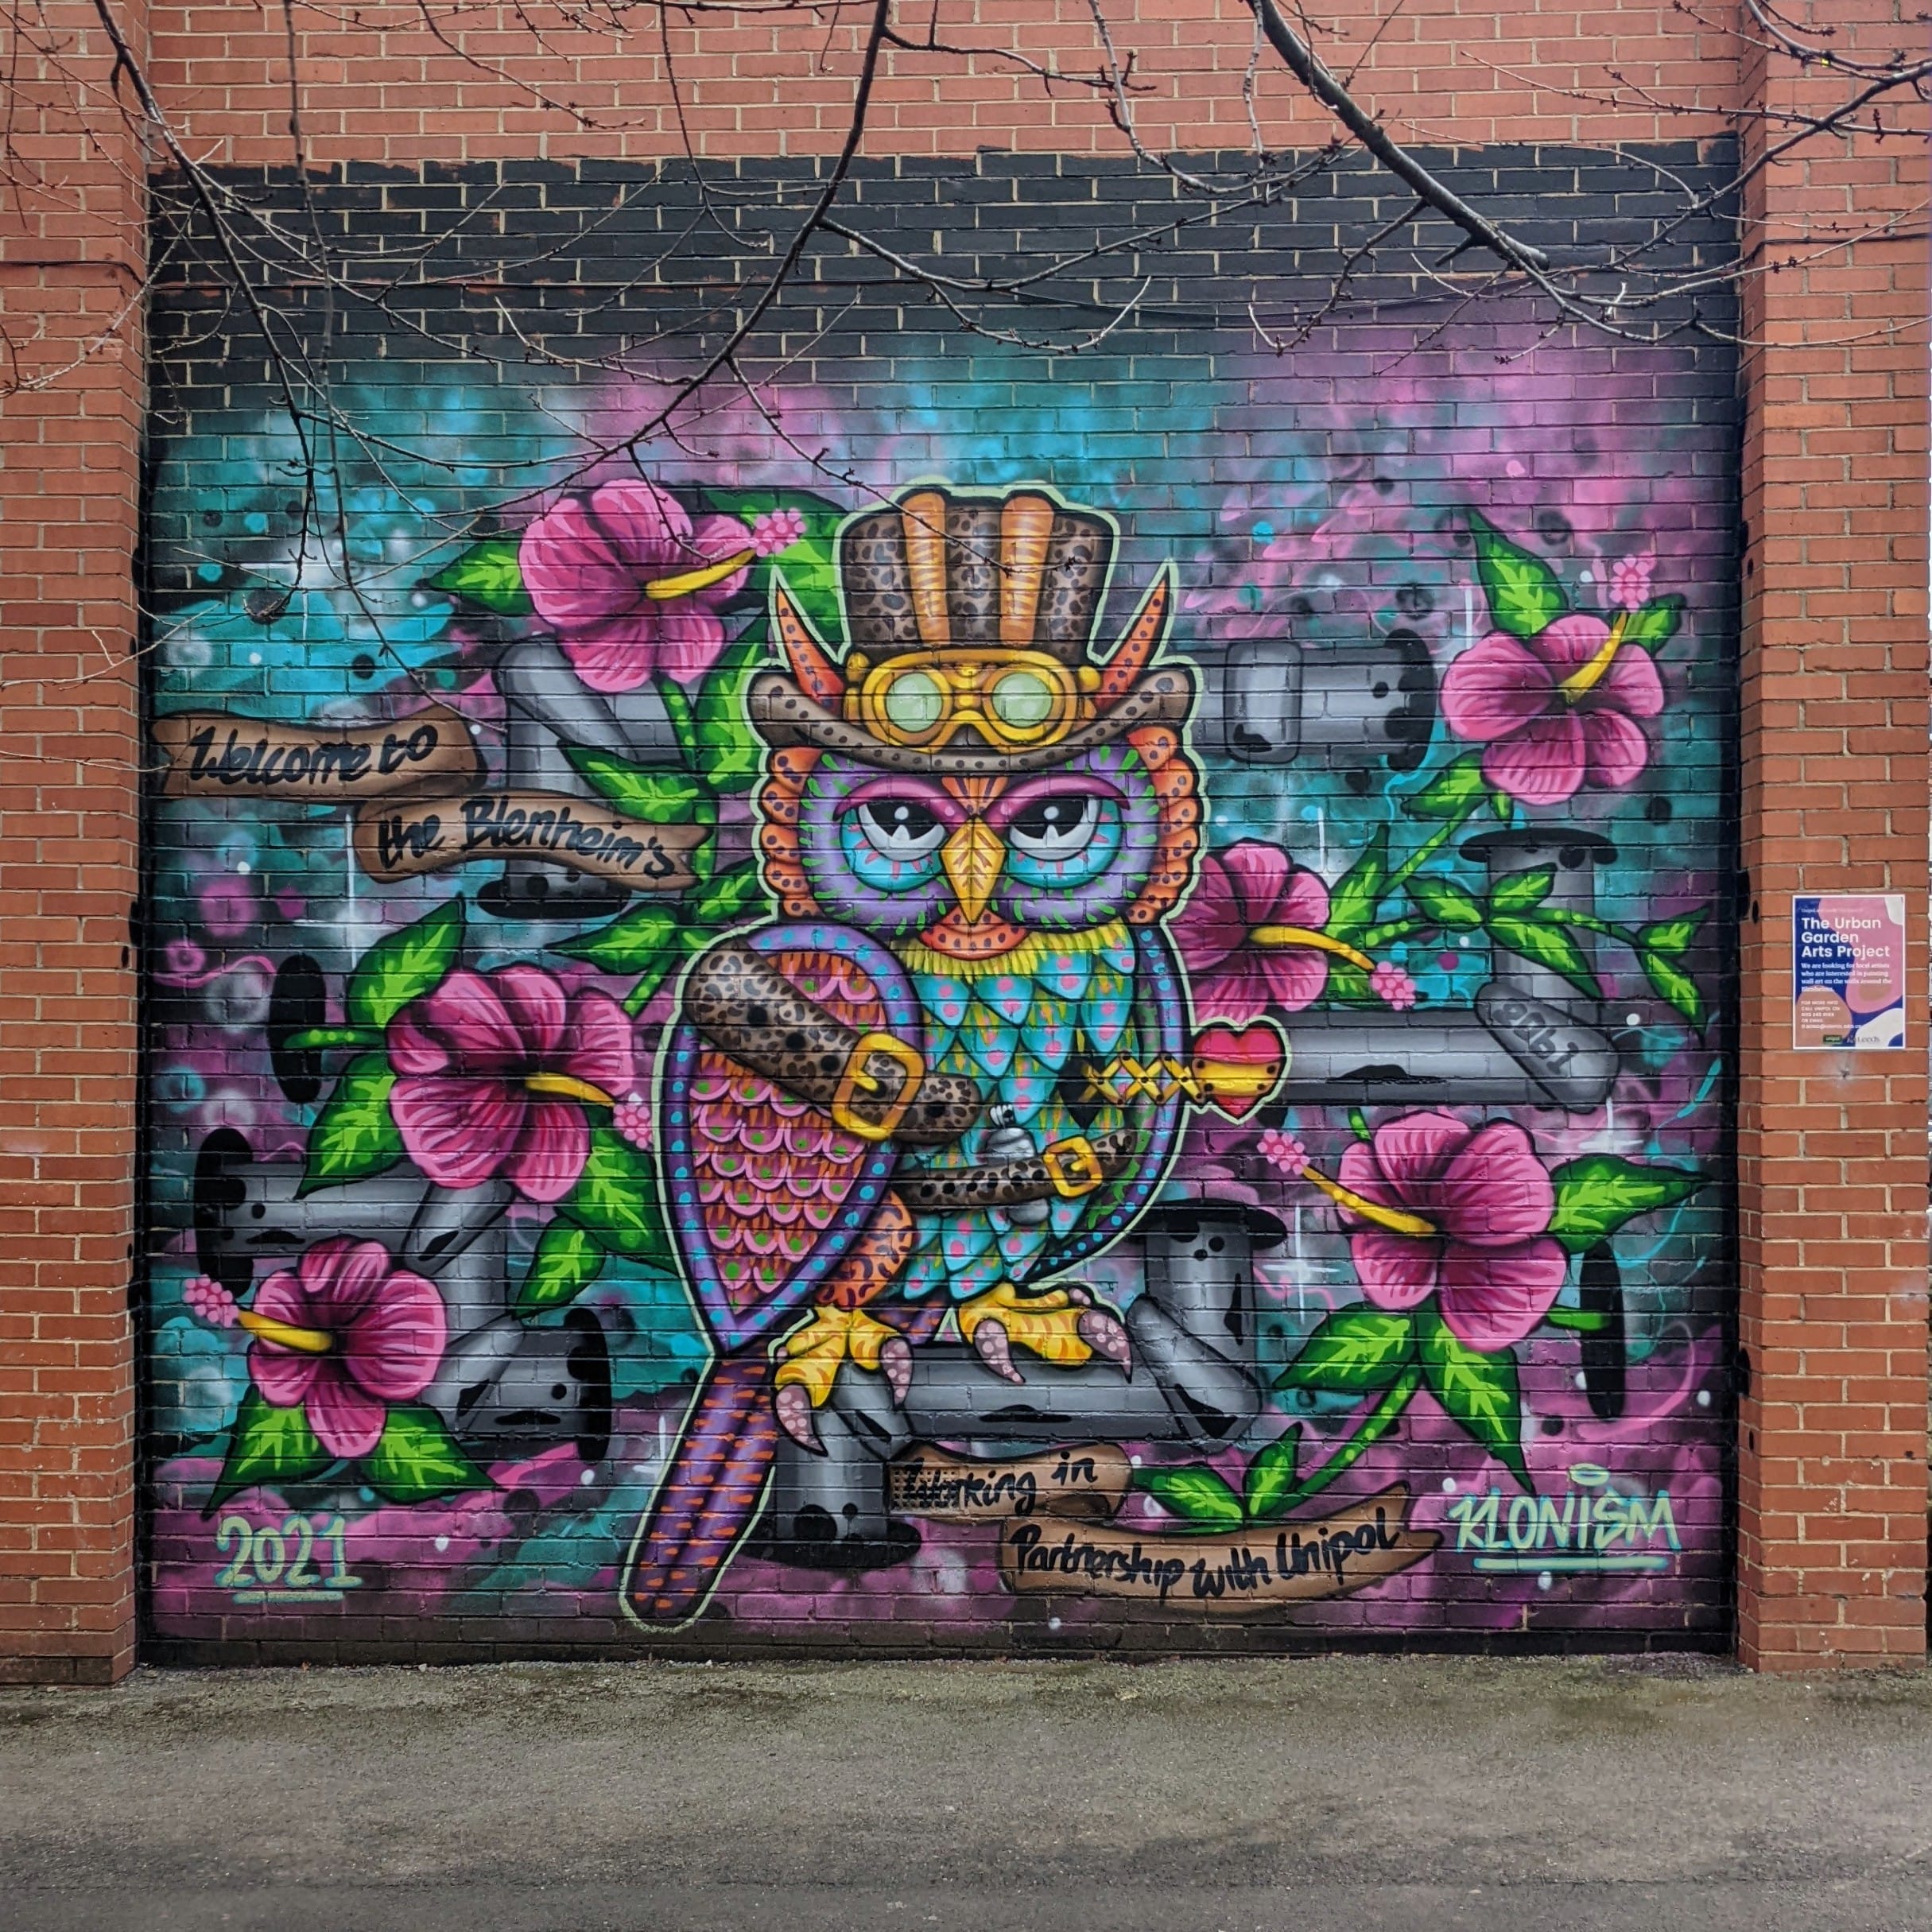 Graffiti 5517 Blenheim by the artist Klonism captured by Igor in Leeds United Kingdom